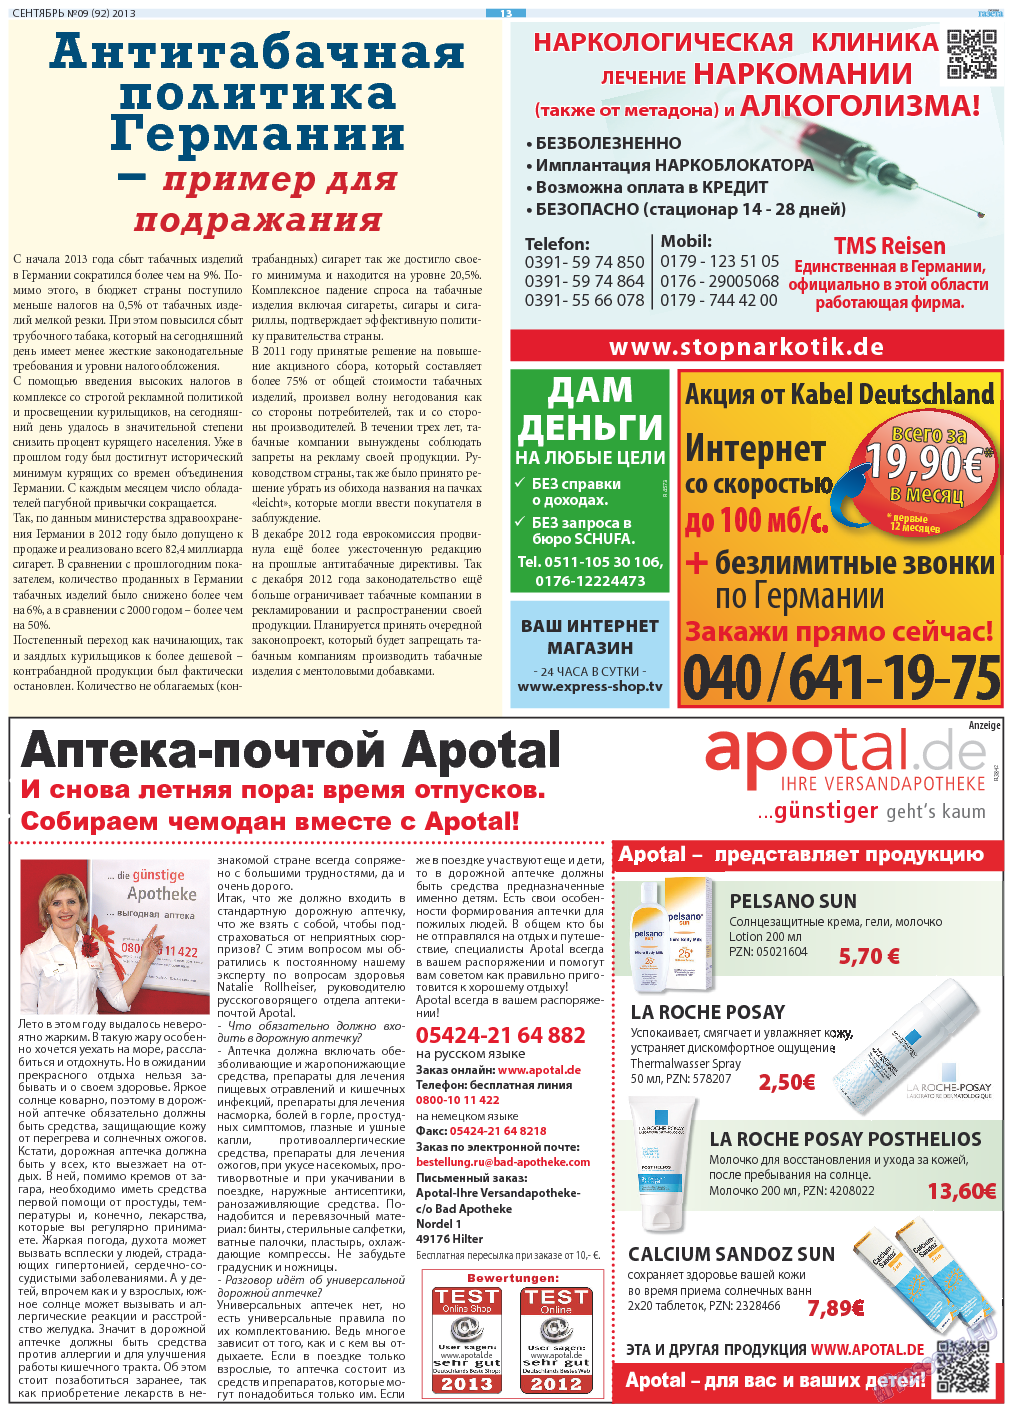 Русская Газета, газета. 2013 №9 стр.13